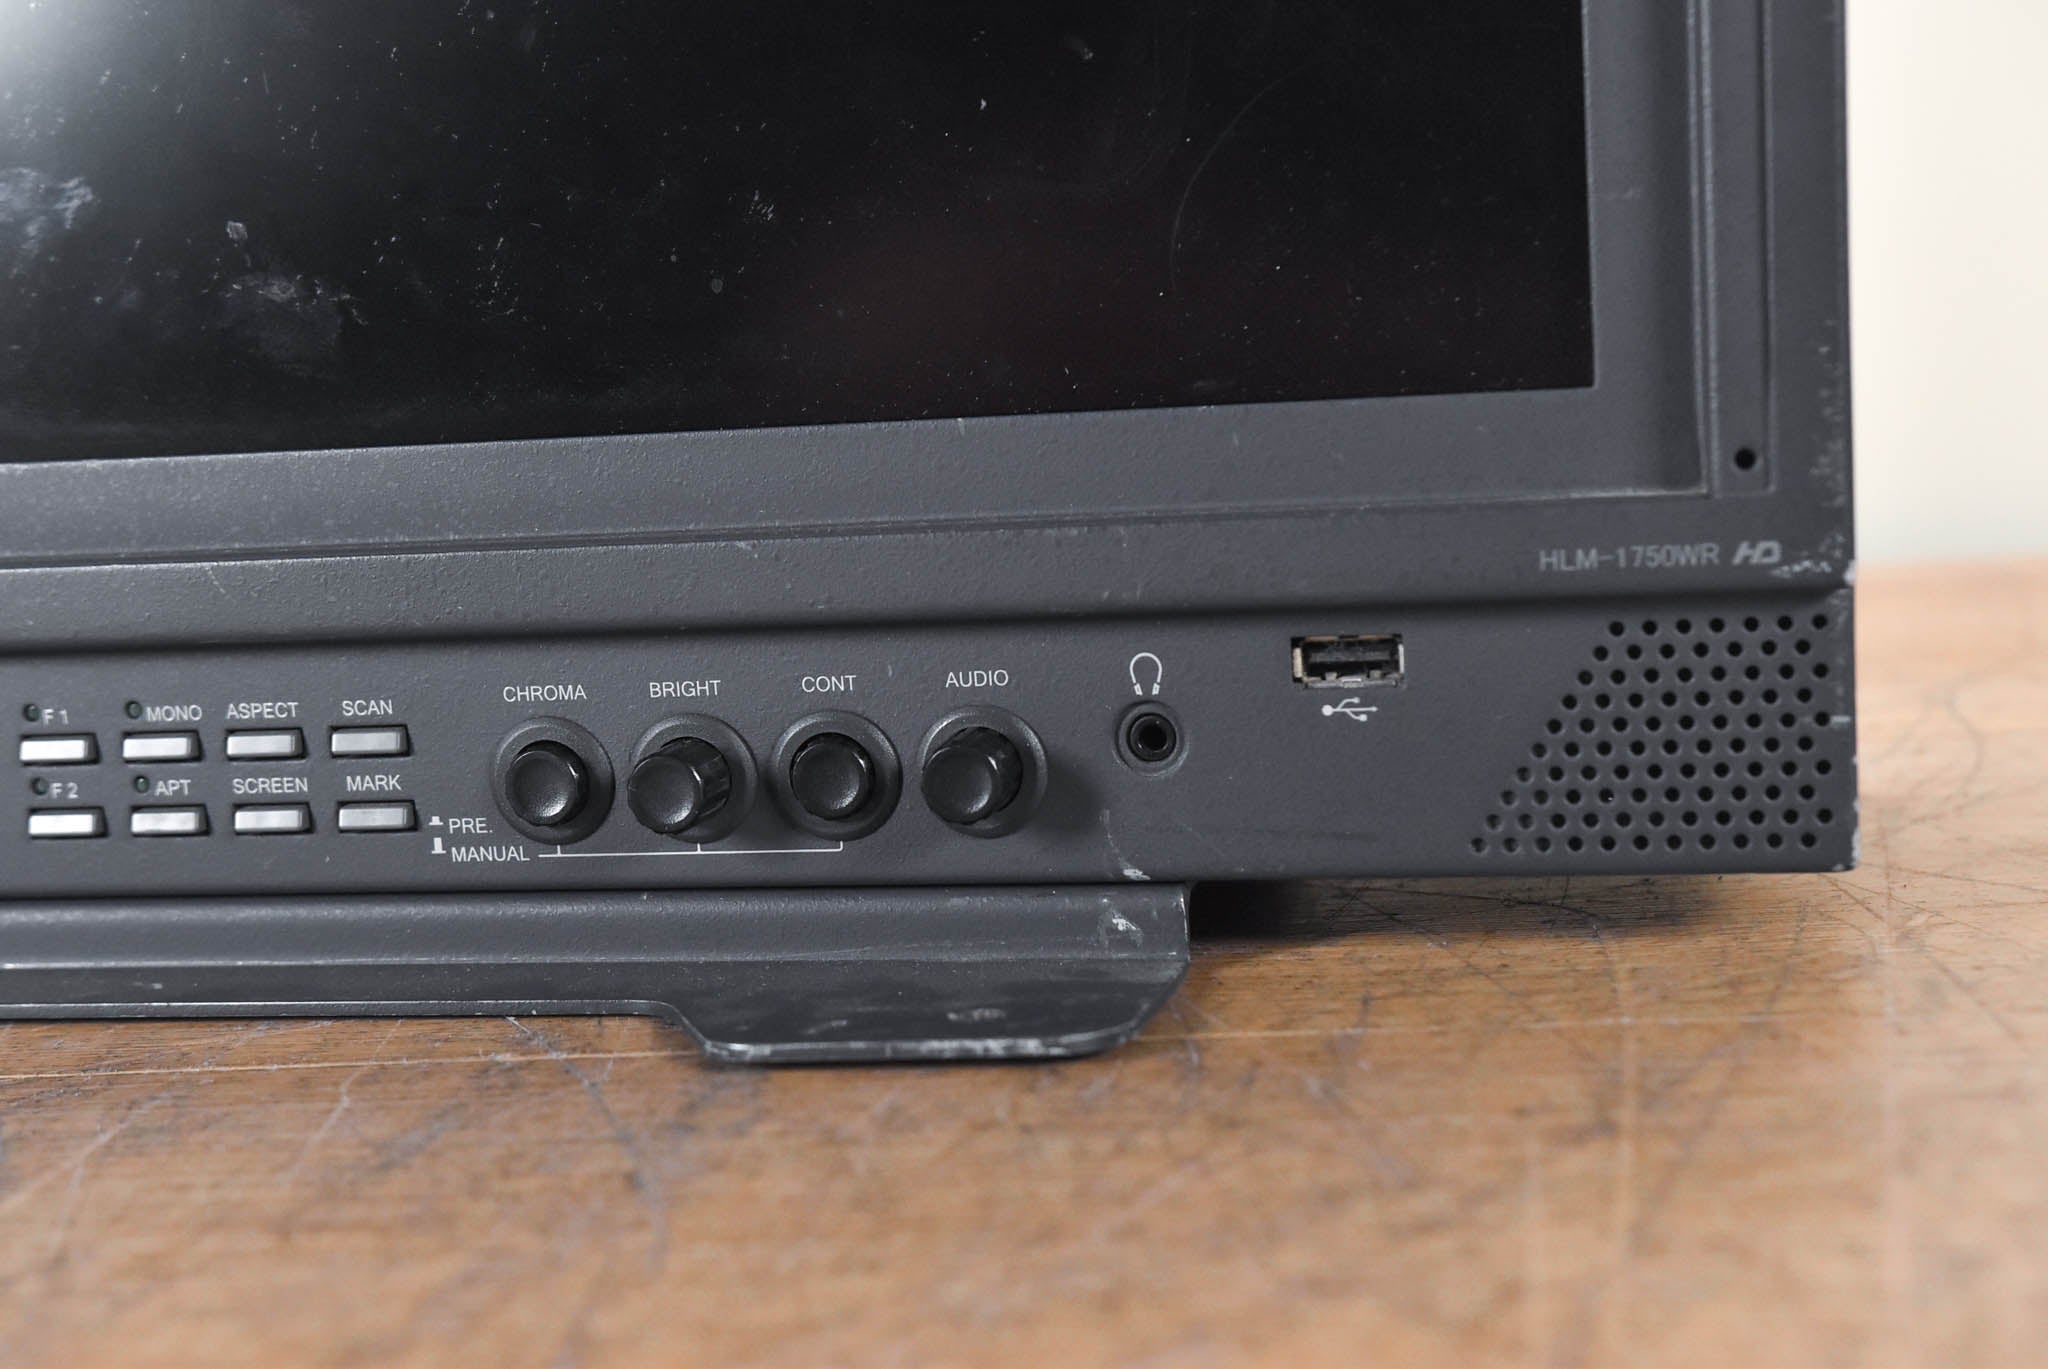 Ikegami HLM-1750WR 17" Full HD HDTV/SDTV Multi-Format LCD Color Monitor